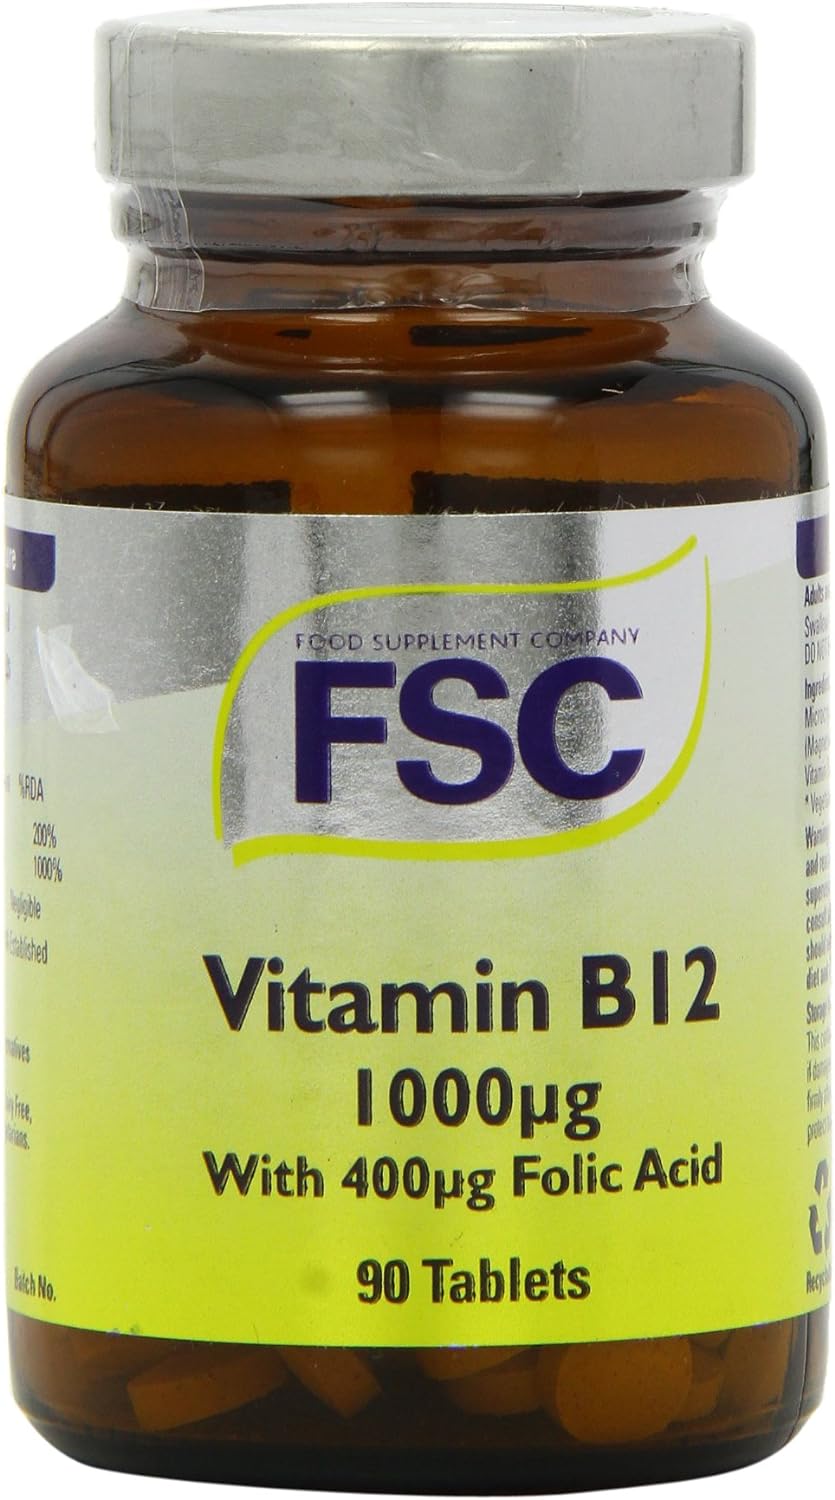 FSC 1000ug Vitamin B12 - Pack of 90 Tablets

140.61 Grams